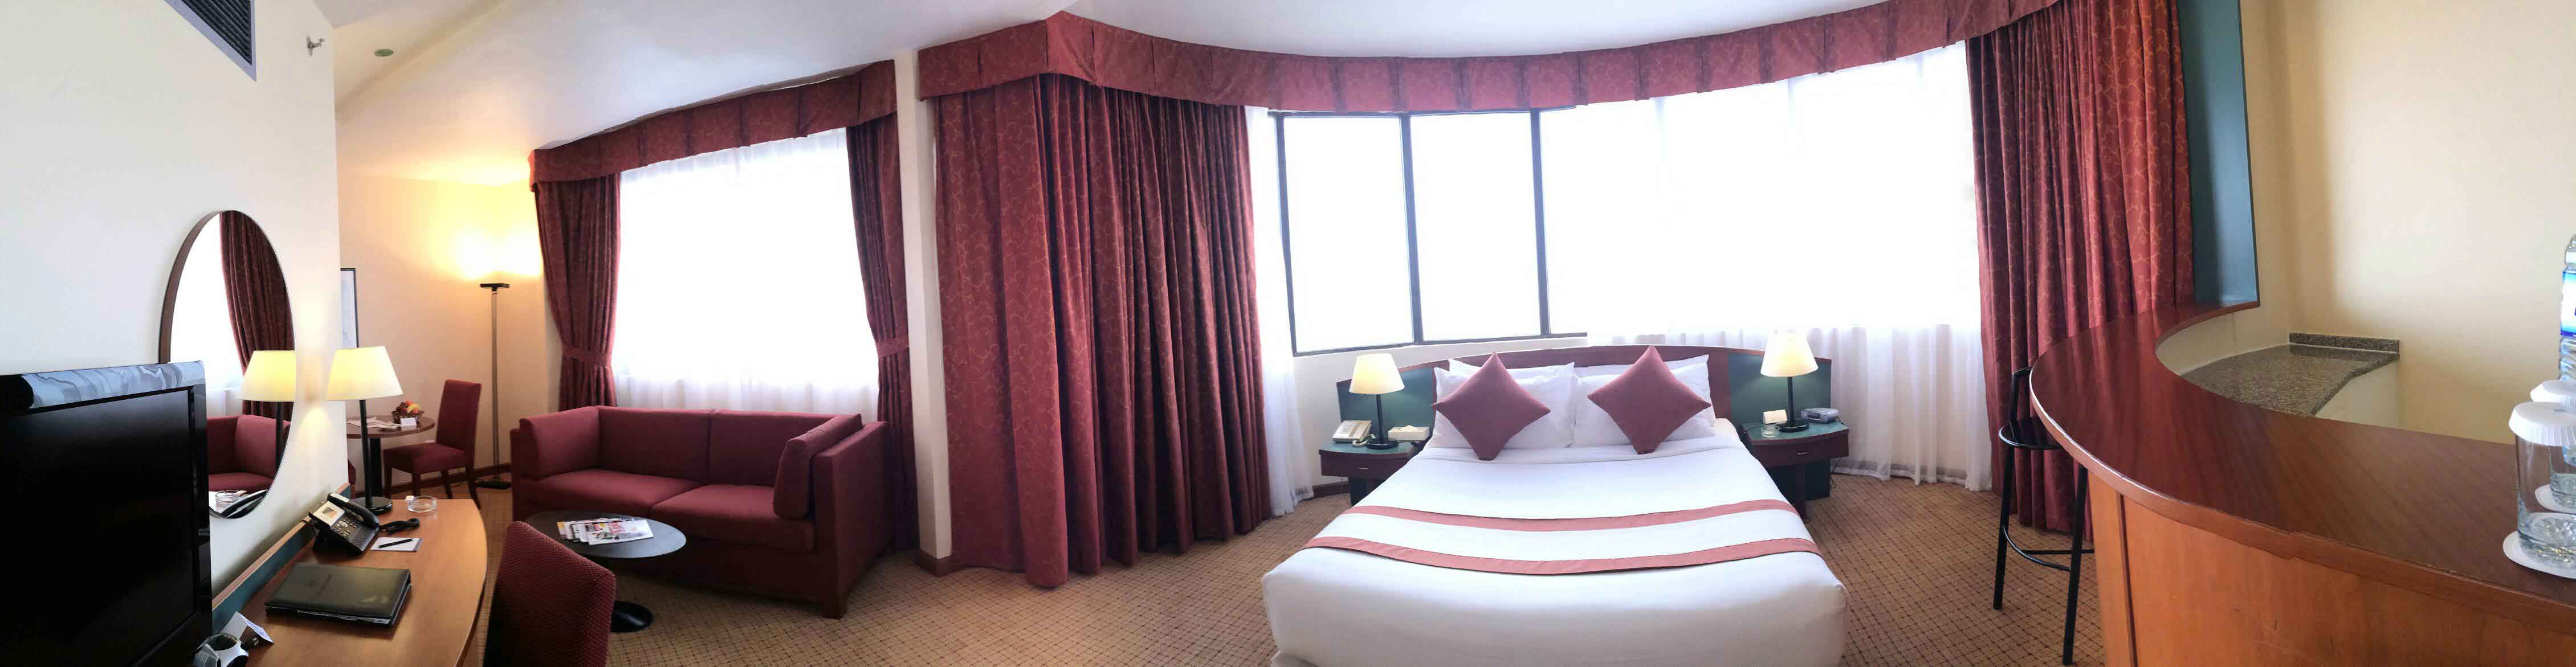 Al Diar Dana Hotel, Abu Dhabi